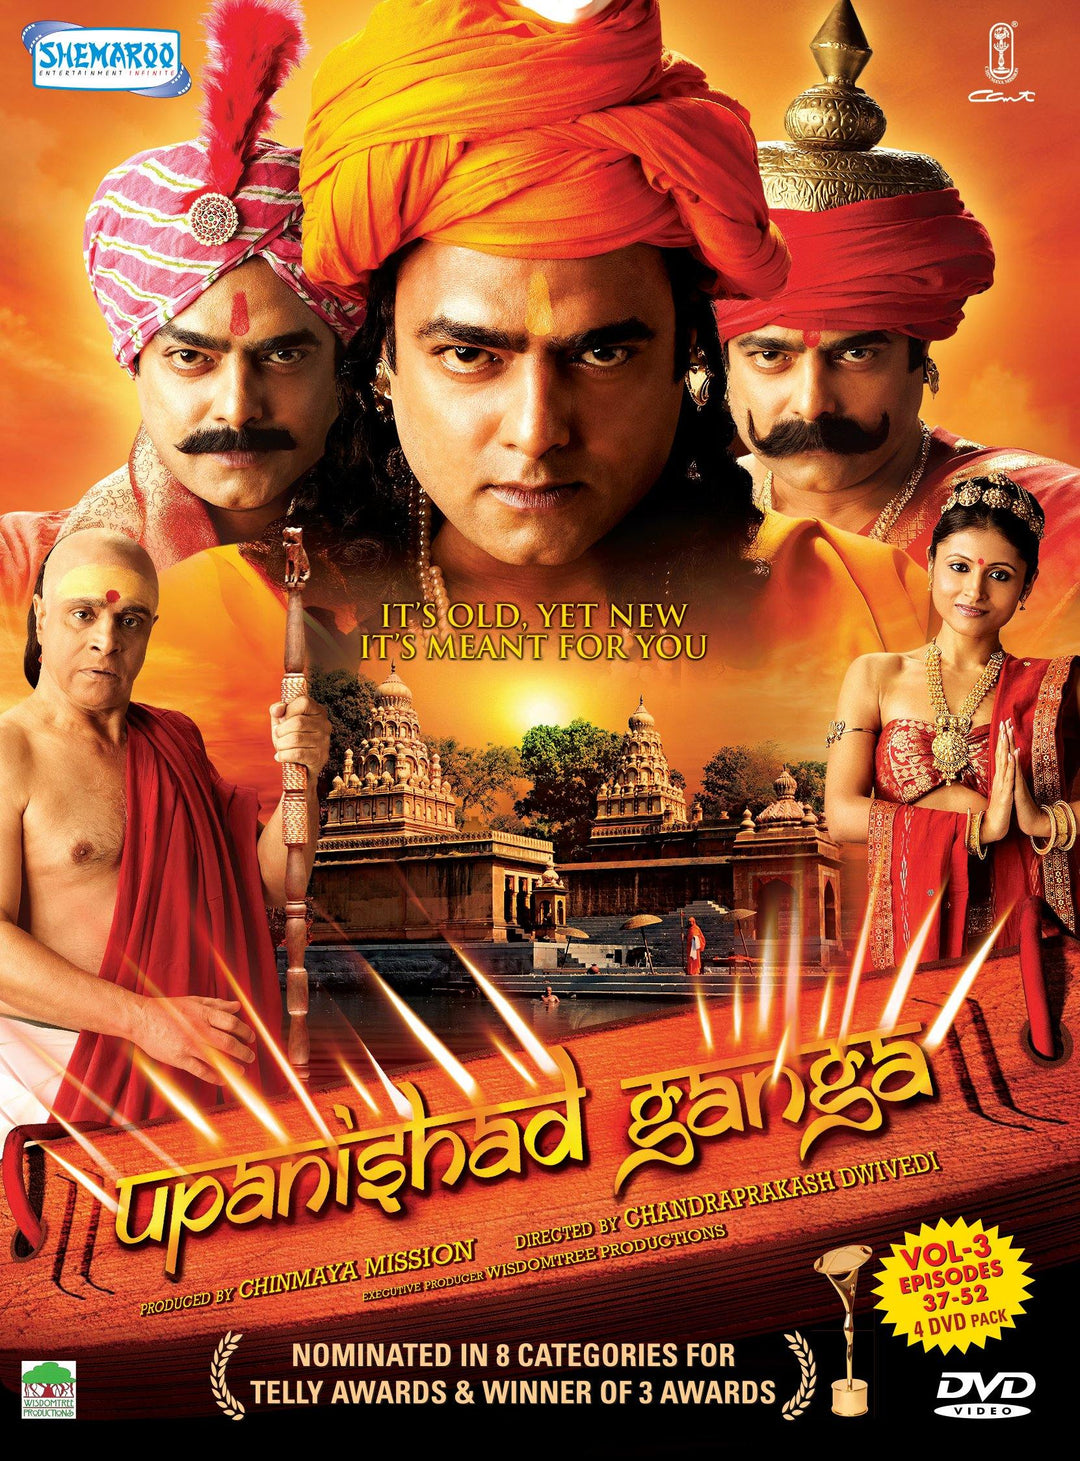 Upanishad Ganga Vol 3 of 4 (DVD - Hindi Show with English Subtitles)